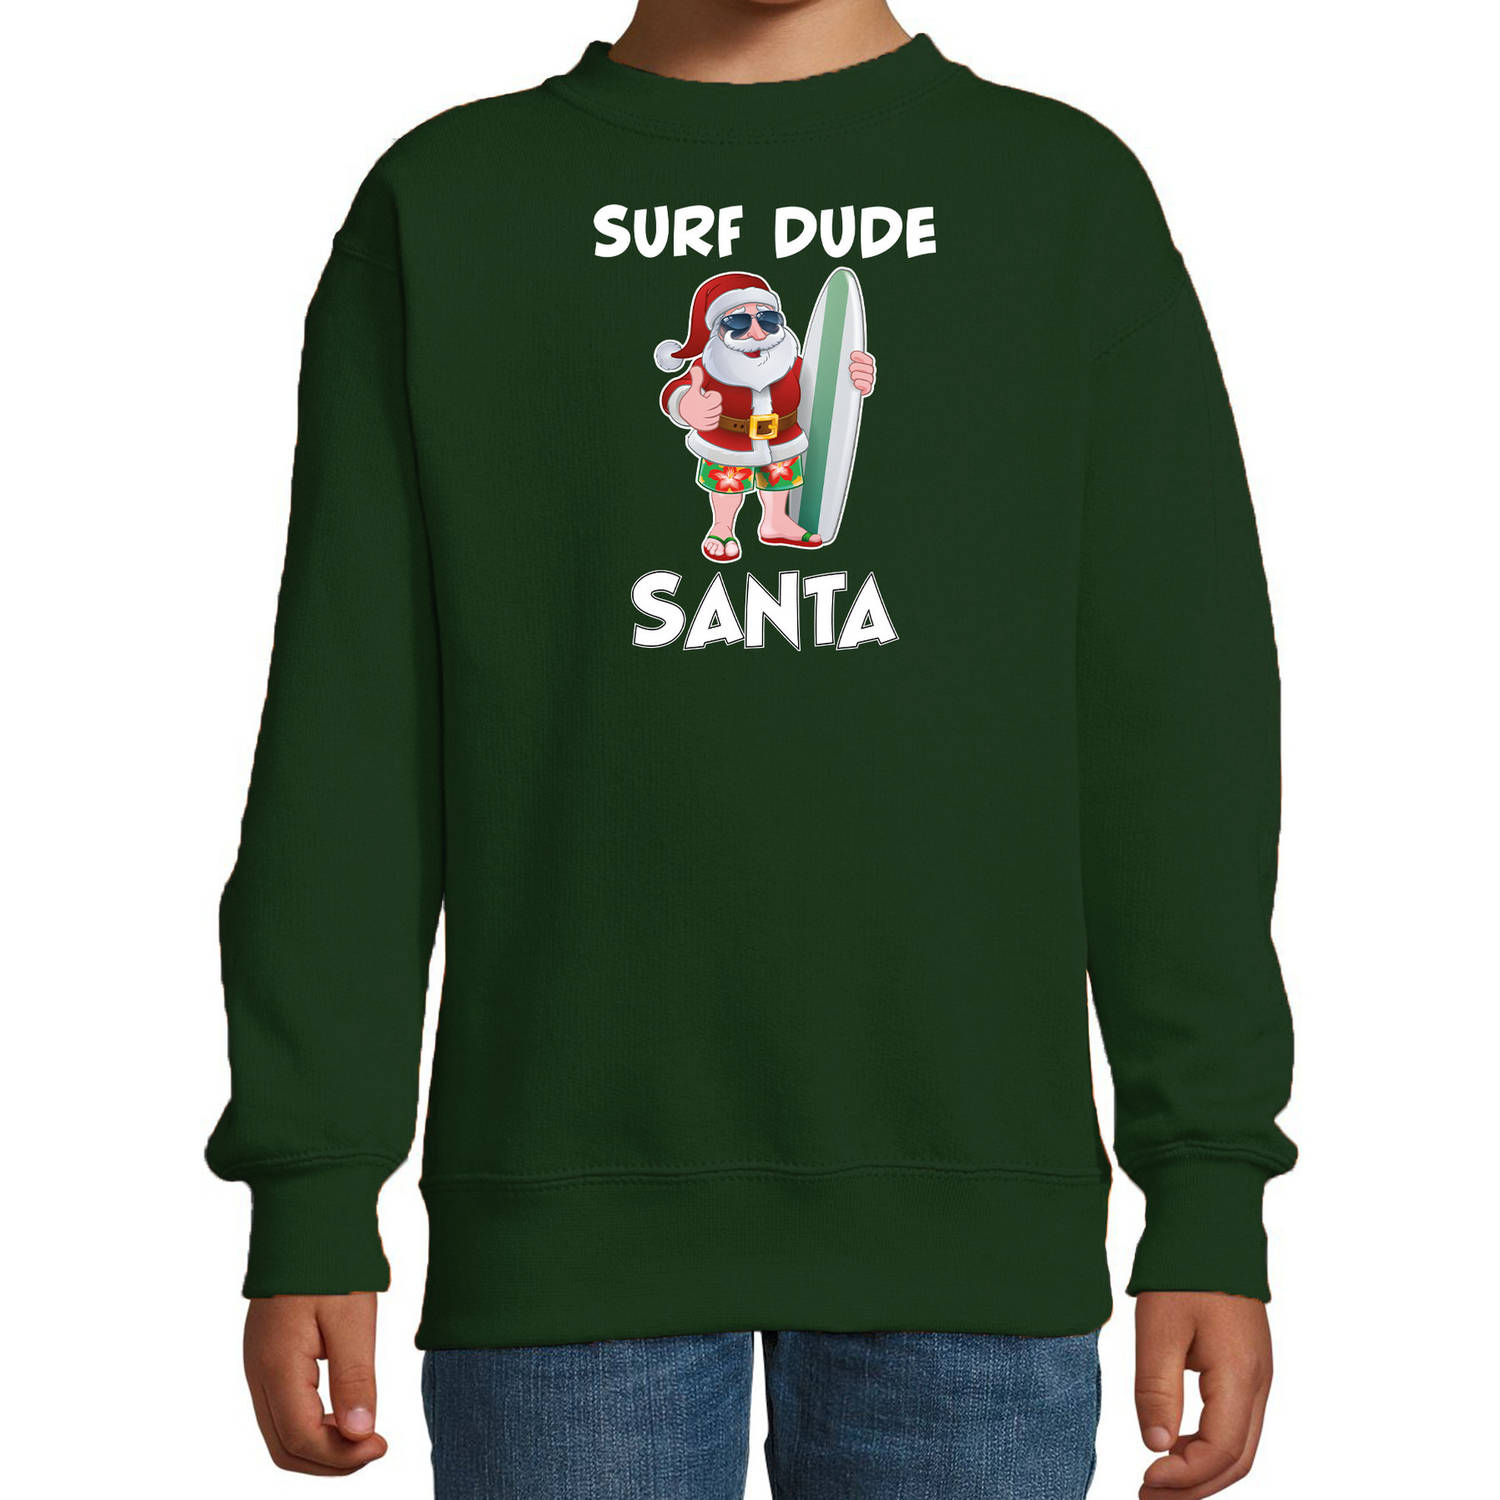 Groene Kersttrui / Kerstkleding surf dude Santa voor kinderen 9-11 jaar (134/146) - kerst truien kind